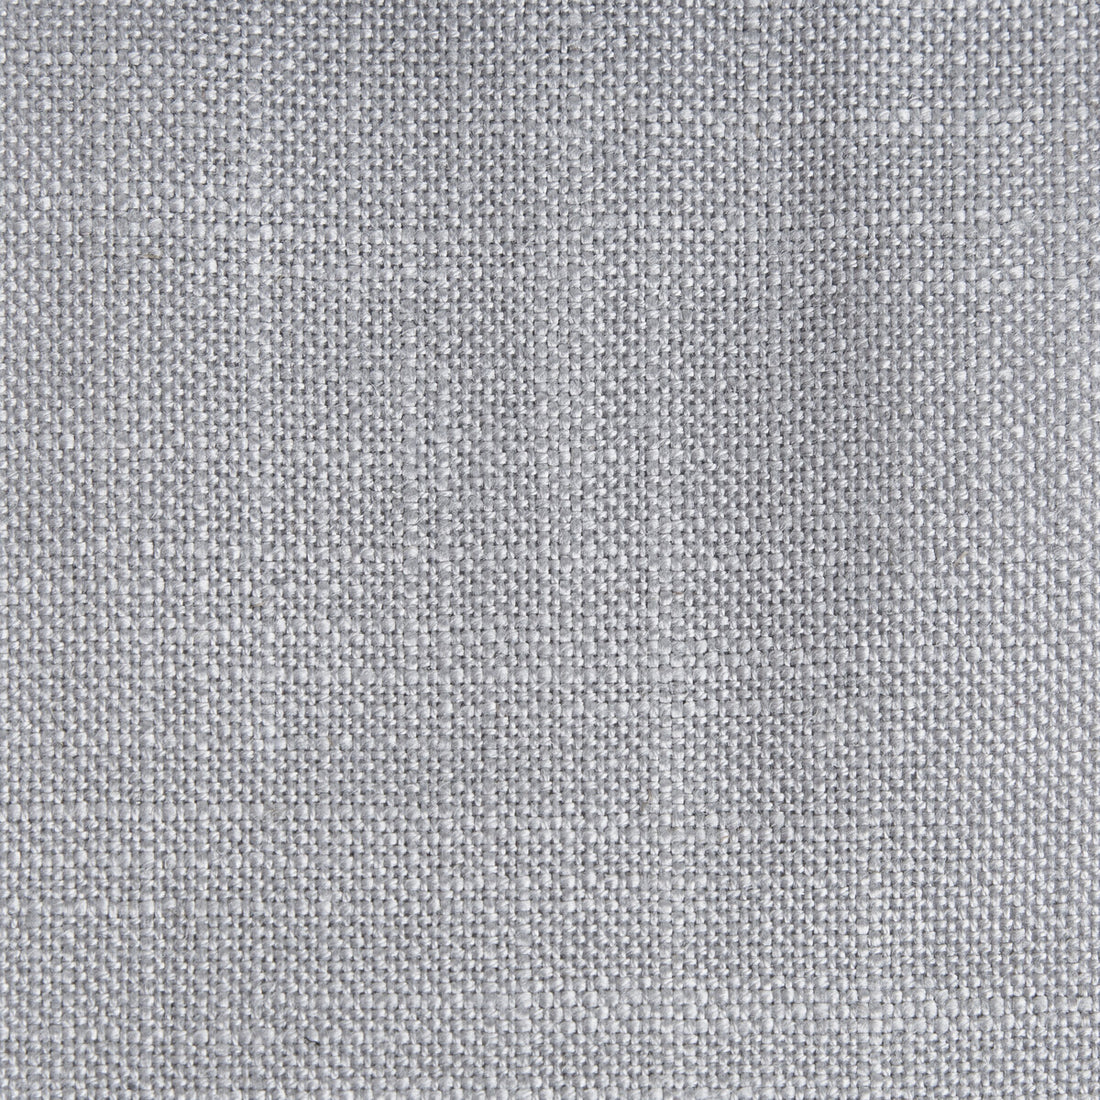 Peru fabric in gris perla color - pattern GDT5548.020.0 - by Gaston y Daniela in the Gaston Nuevo Mundo collection